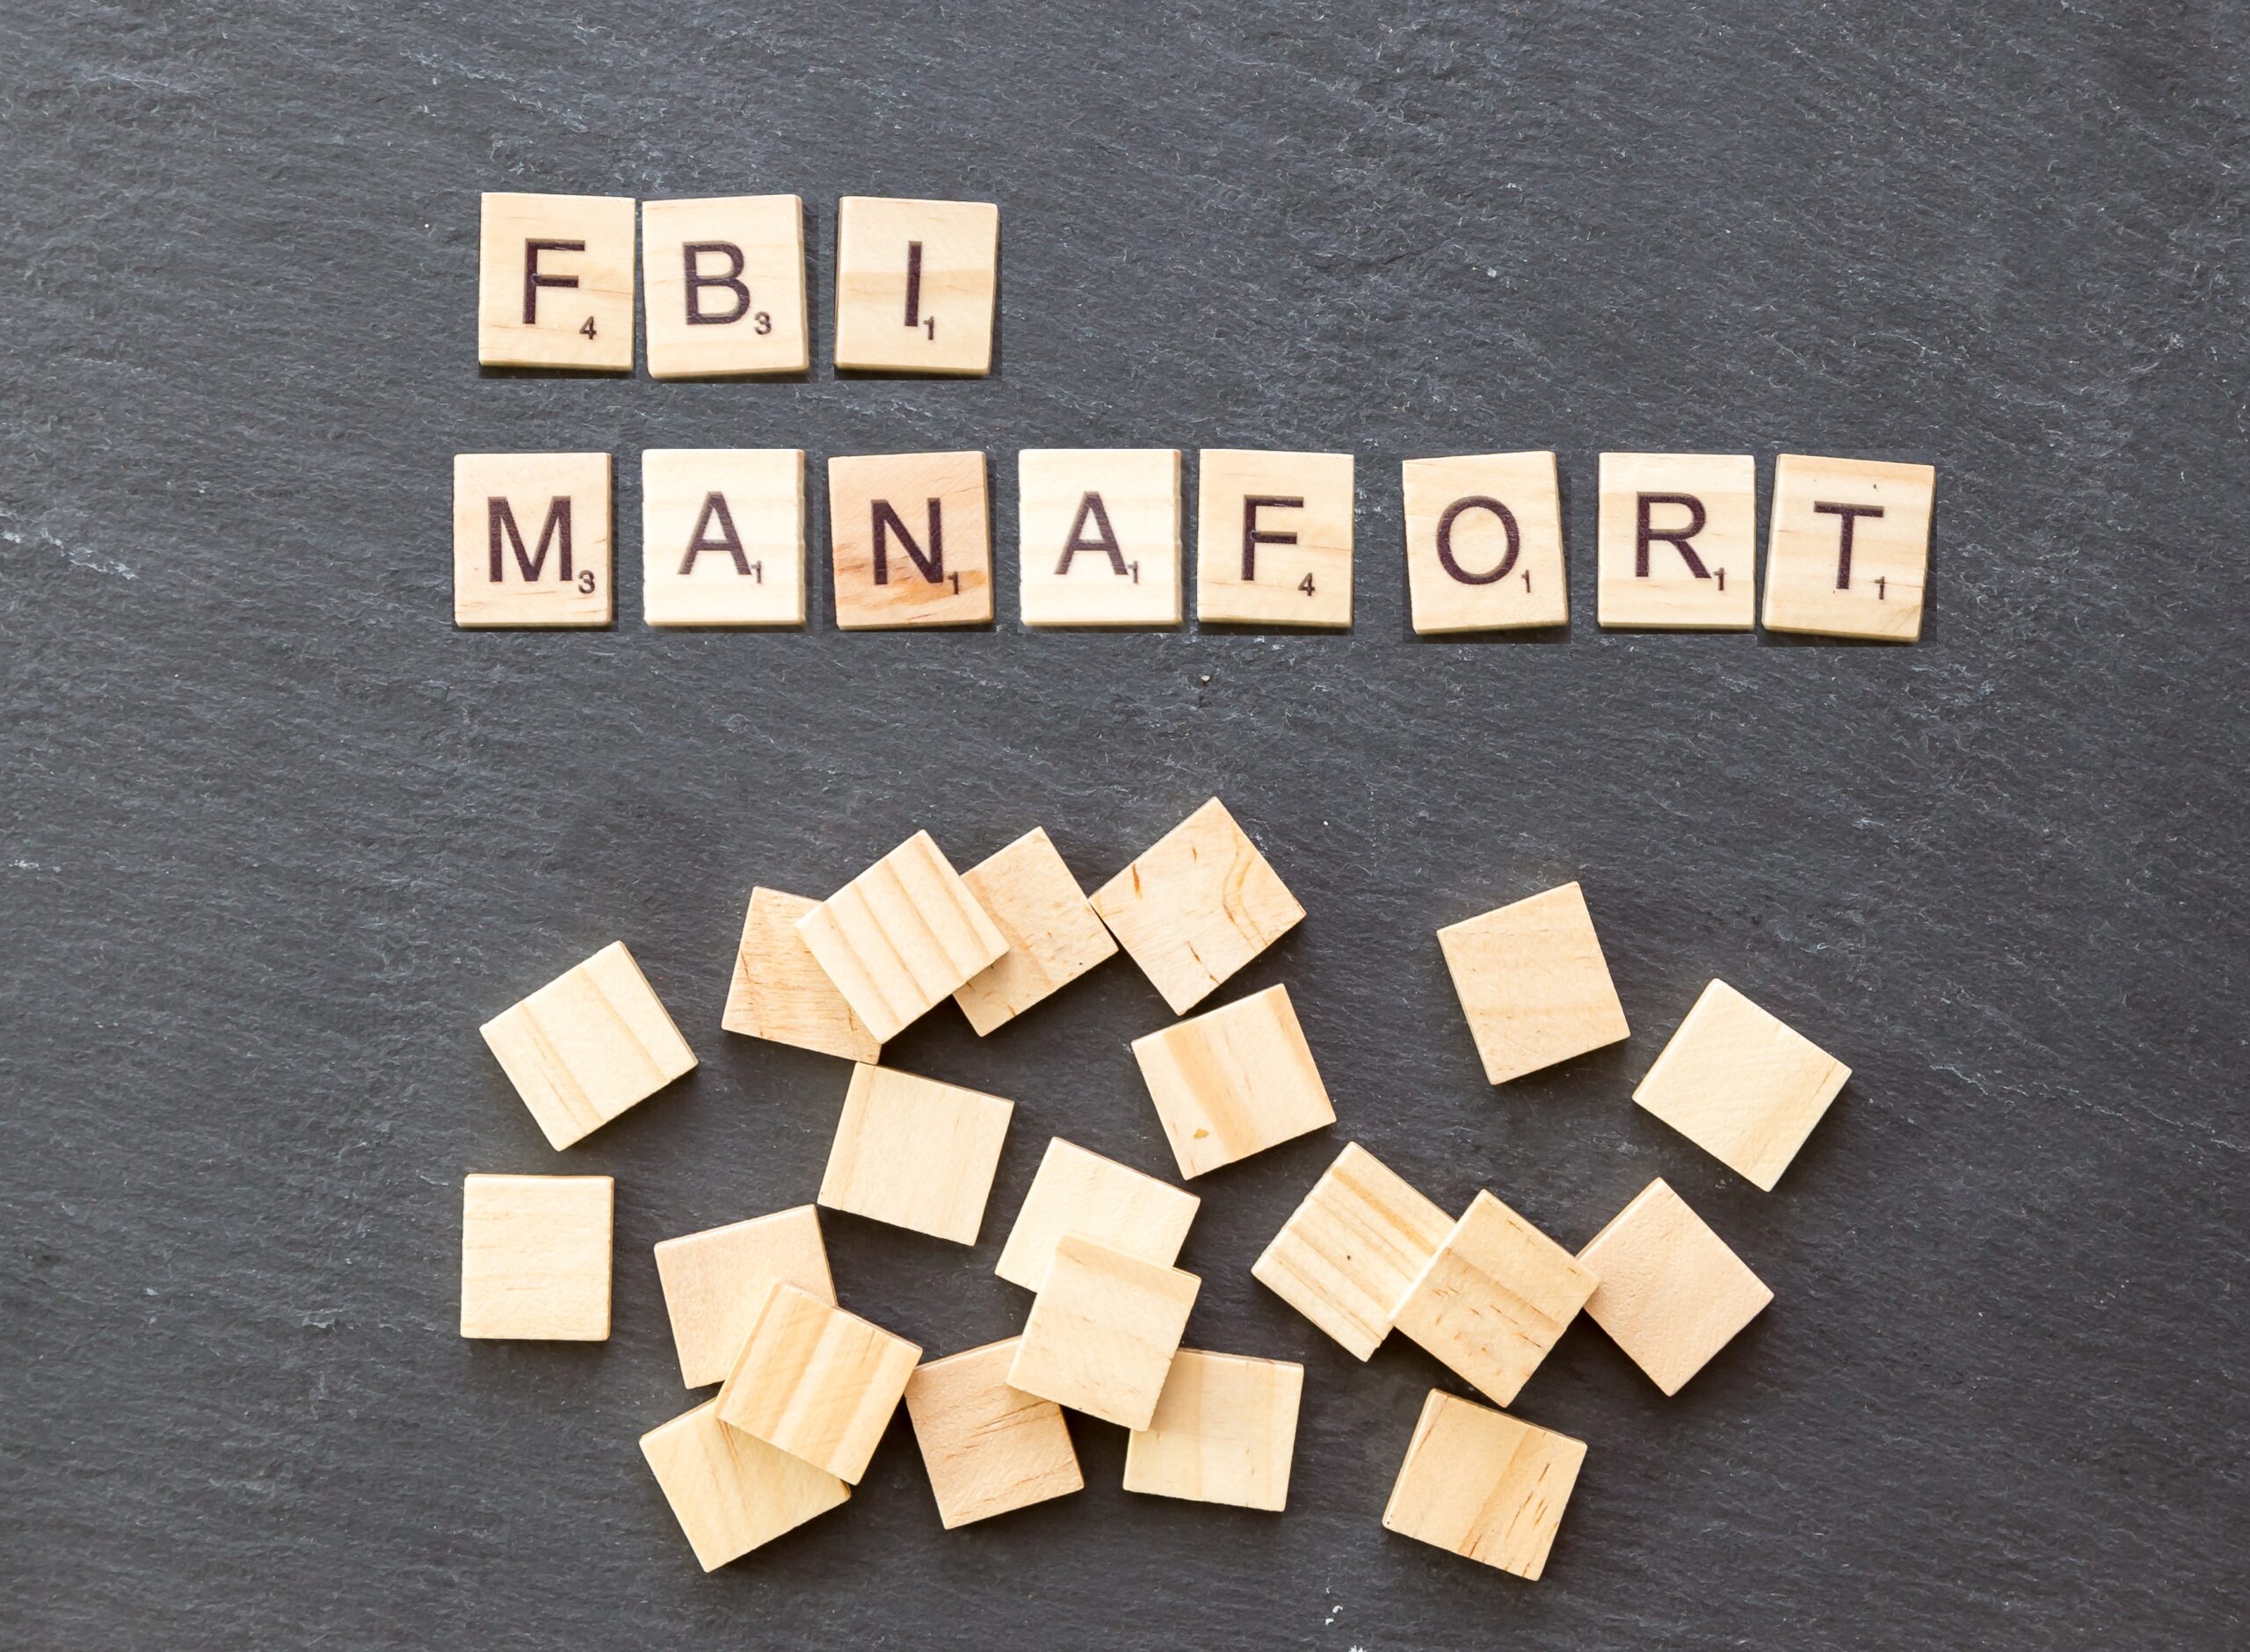 Paul Manafort and the FBI